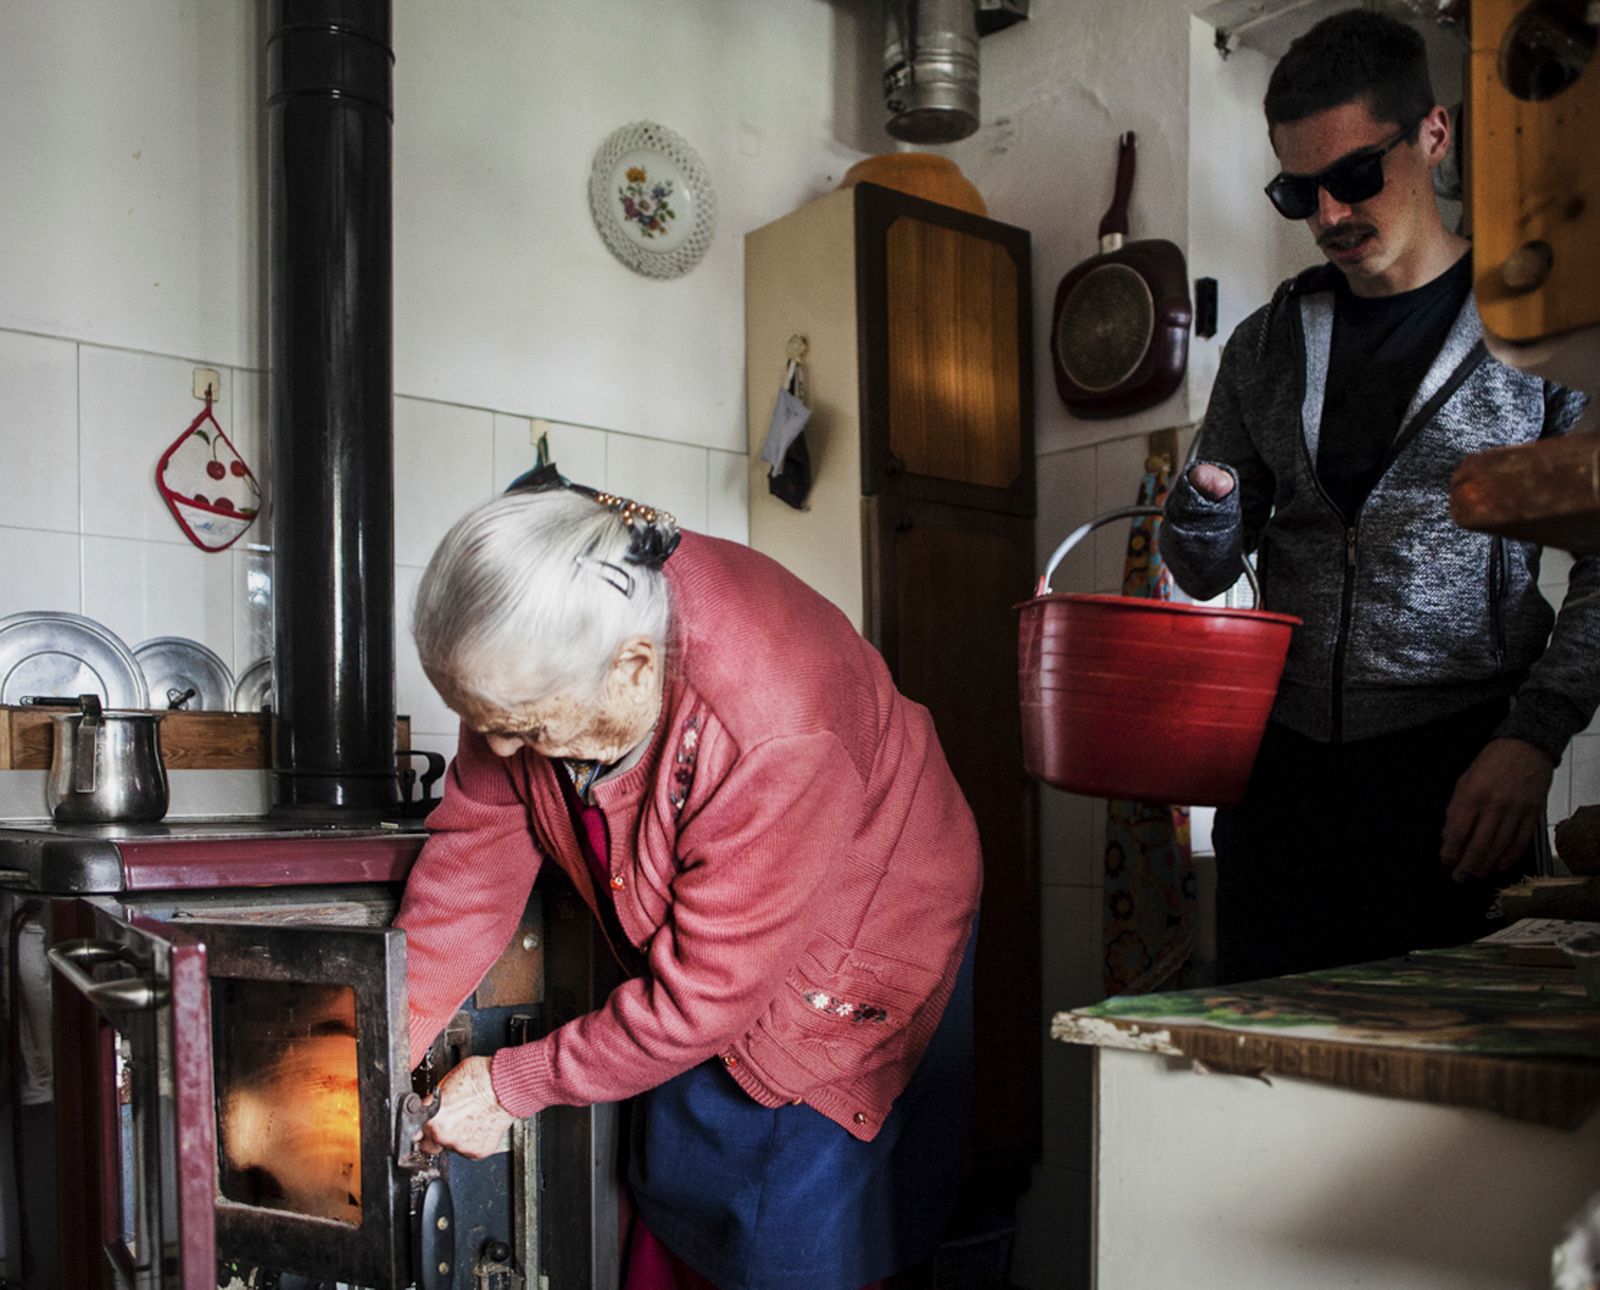 © Mattia Crocetti - Nicolas helps his grandmotherin her house, Novalesa, Italy.